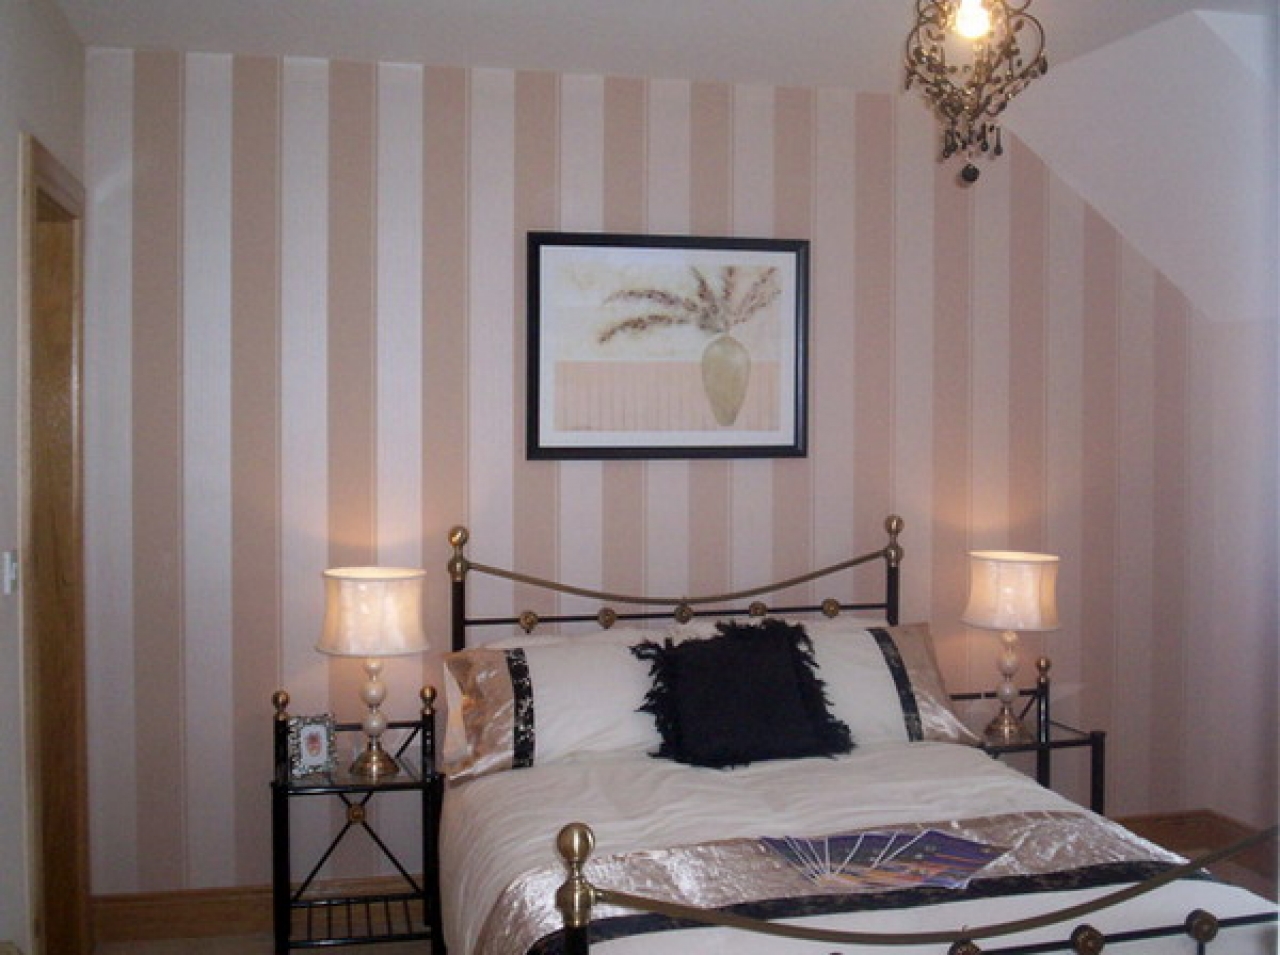 Small bedroom wallpaper borders ideas small master bedroom 1280x955